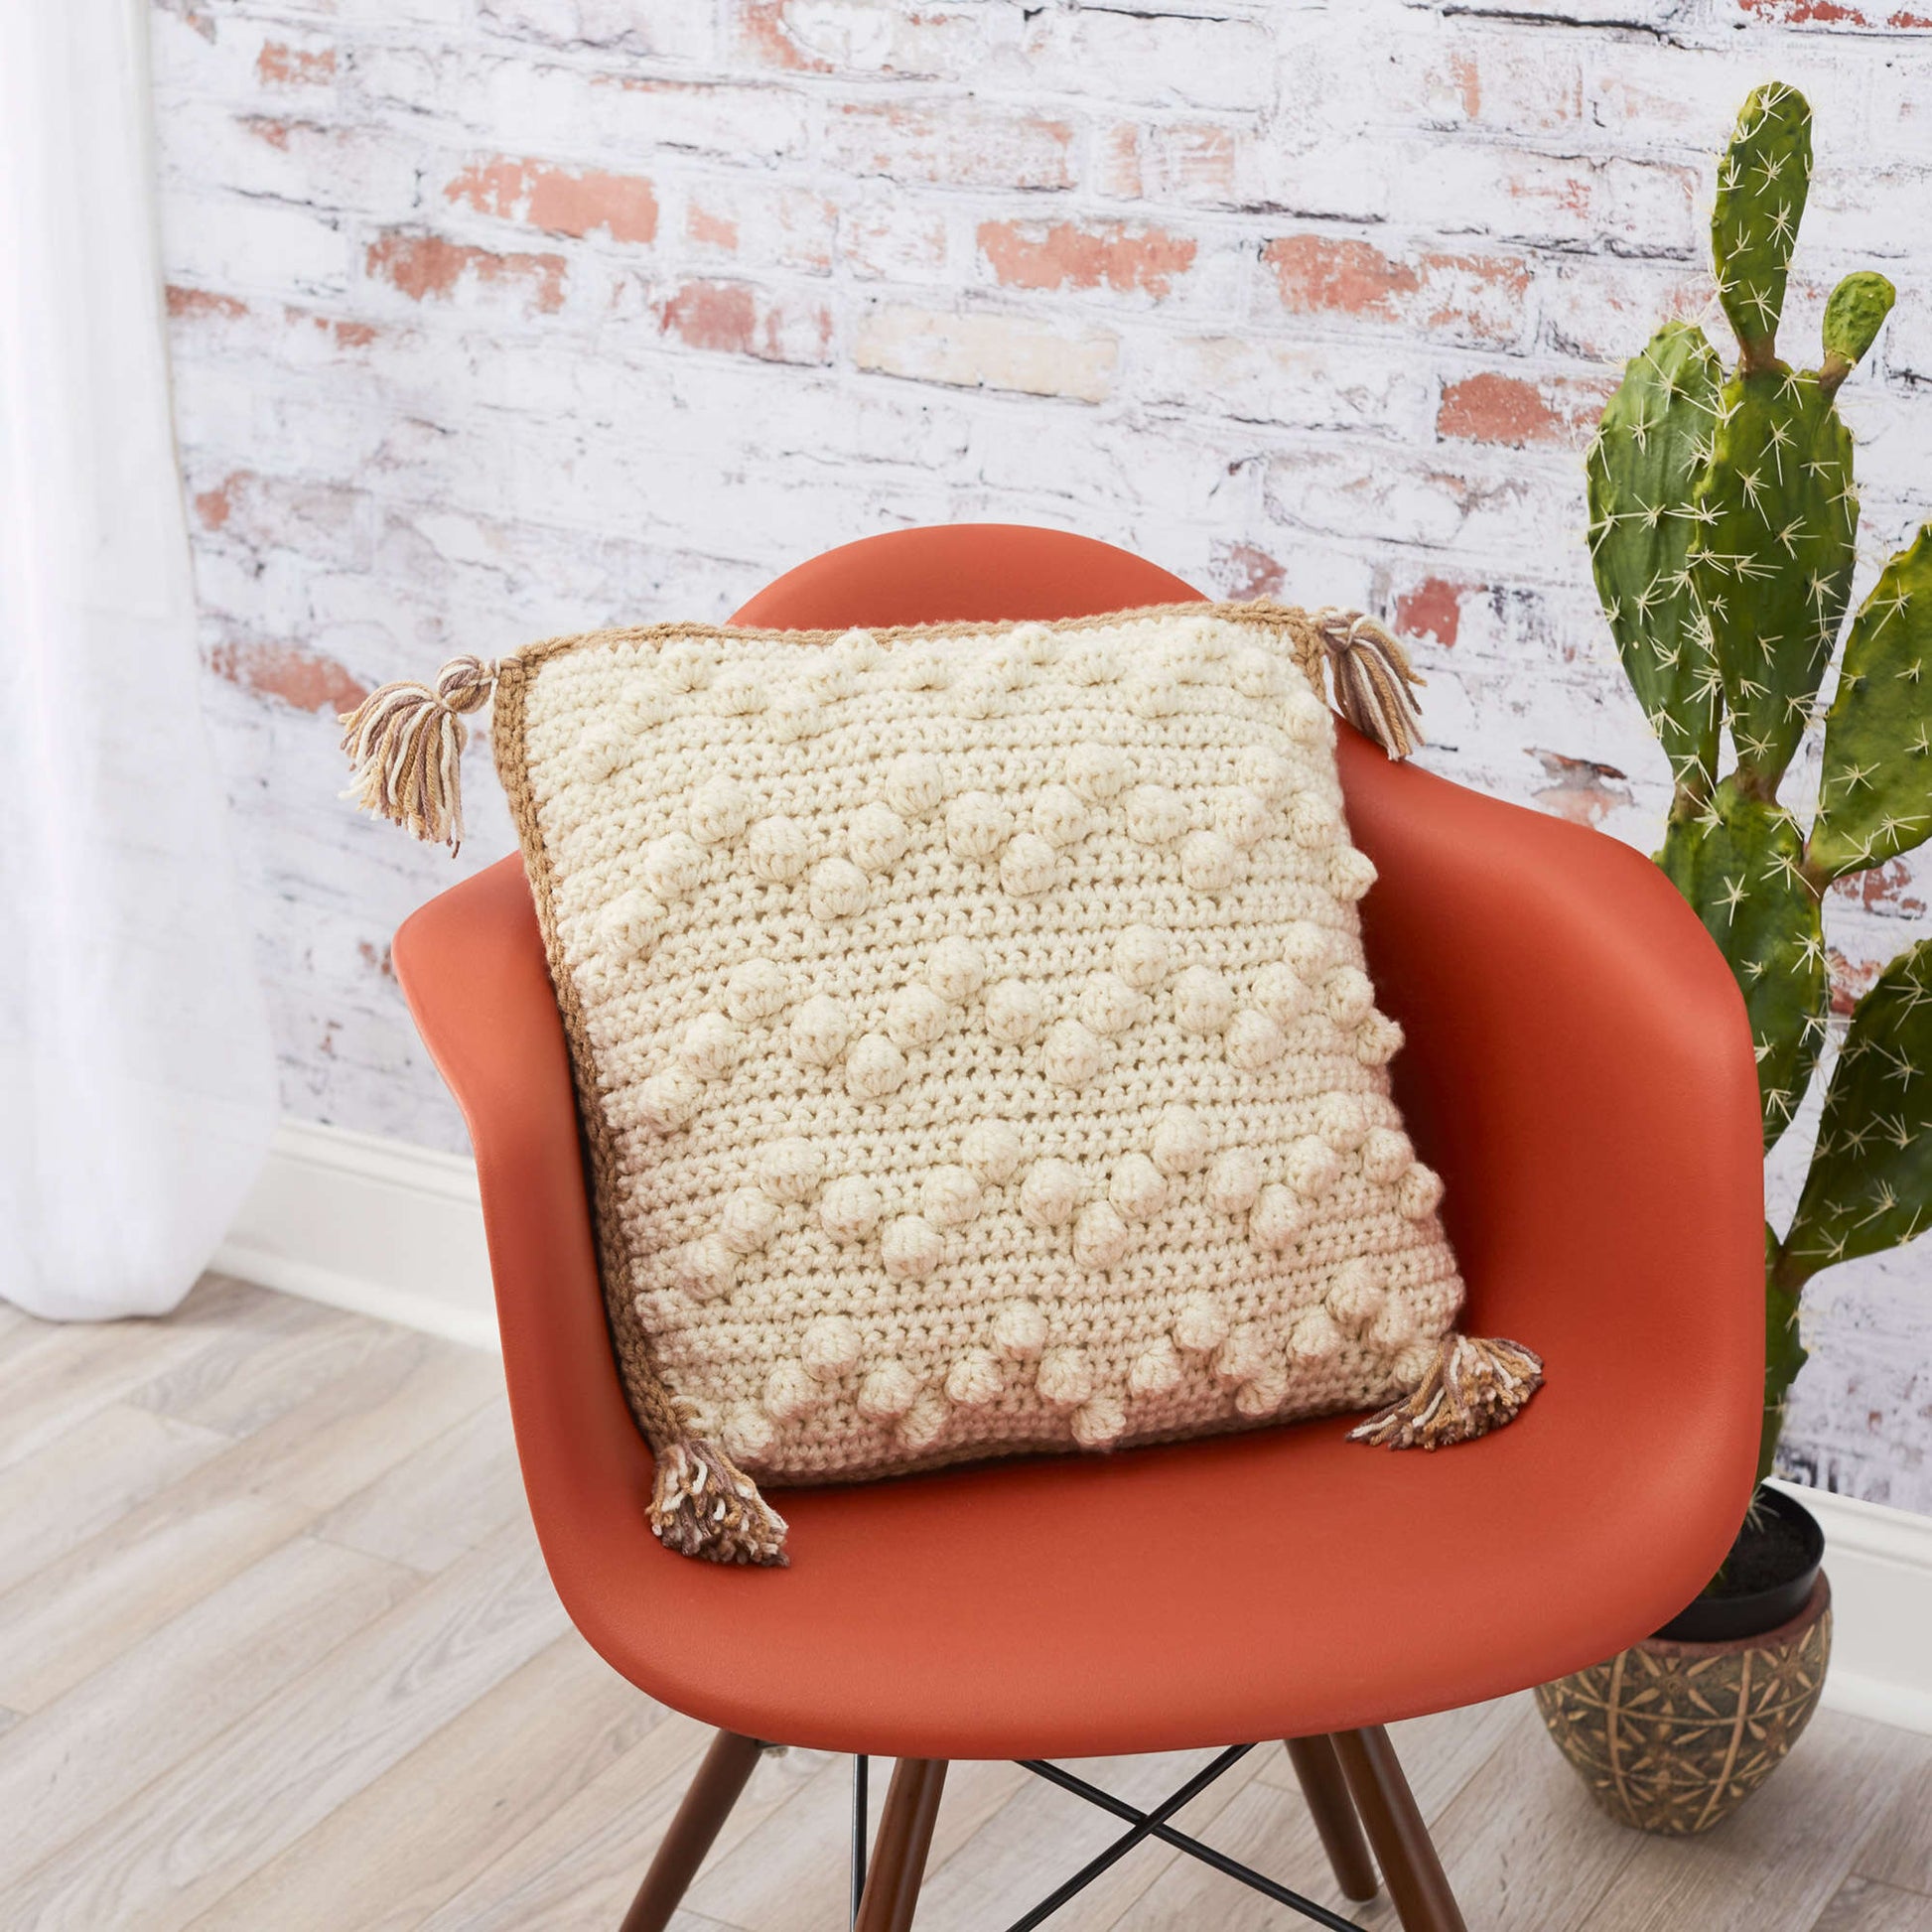 Free Red Heart Crochet Bobble Stitch Pillow Pattern